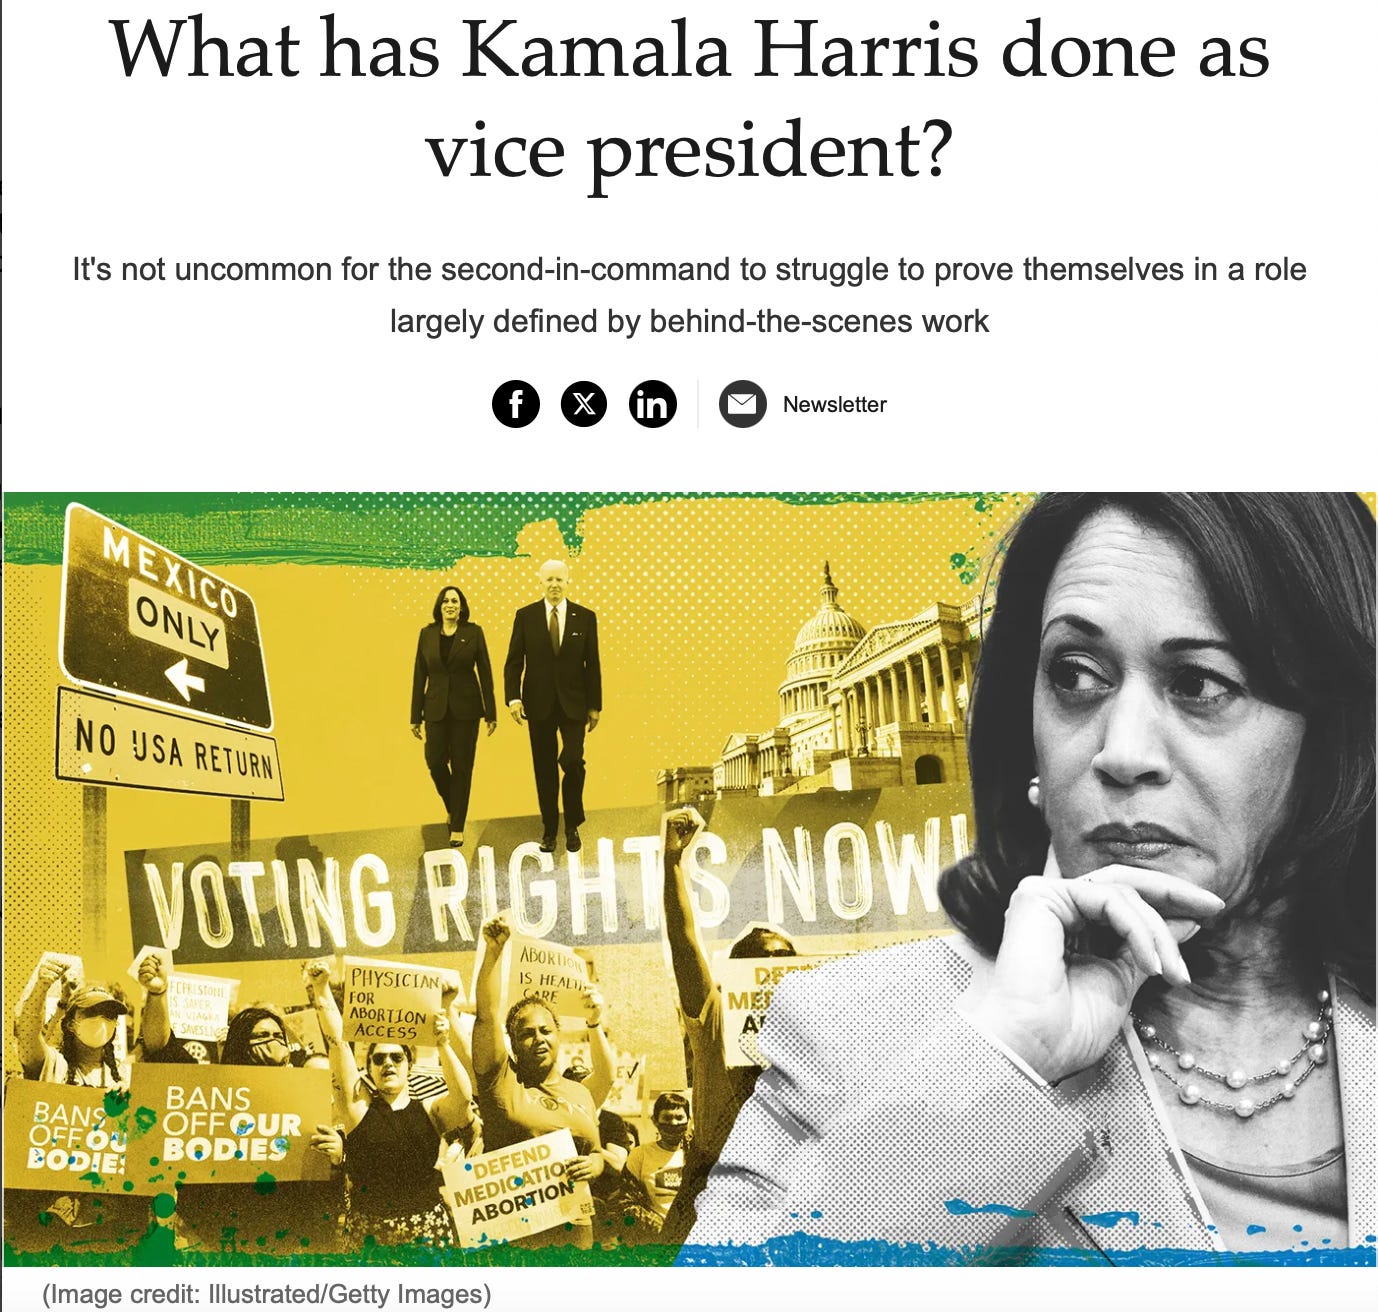 Visual Blindspots and Media Bias: The "Disappearing" of Kamala Harris